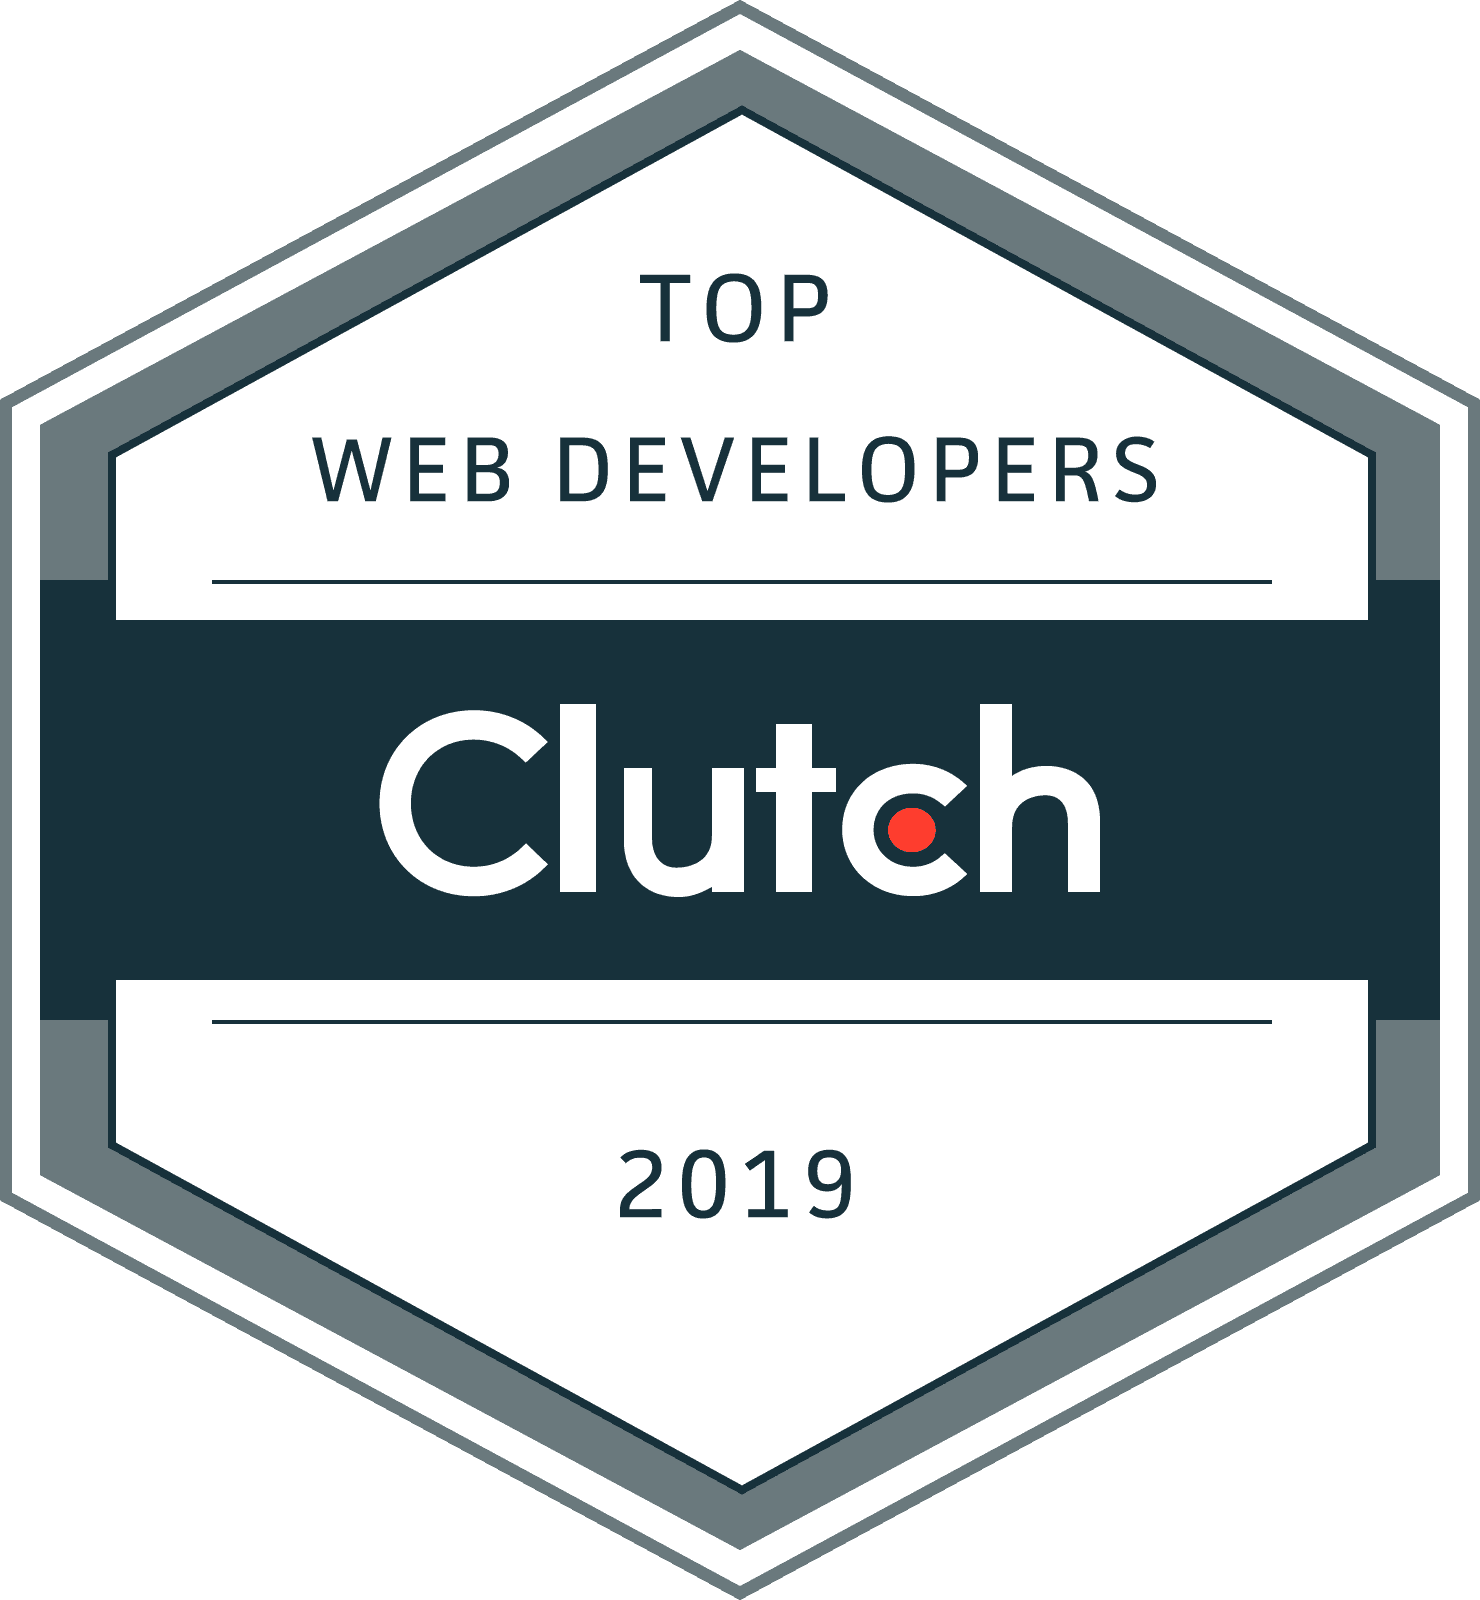 Top Web Developers in Ukraine 2019 by Clutch